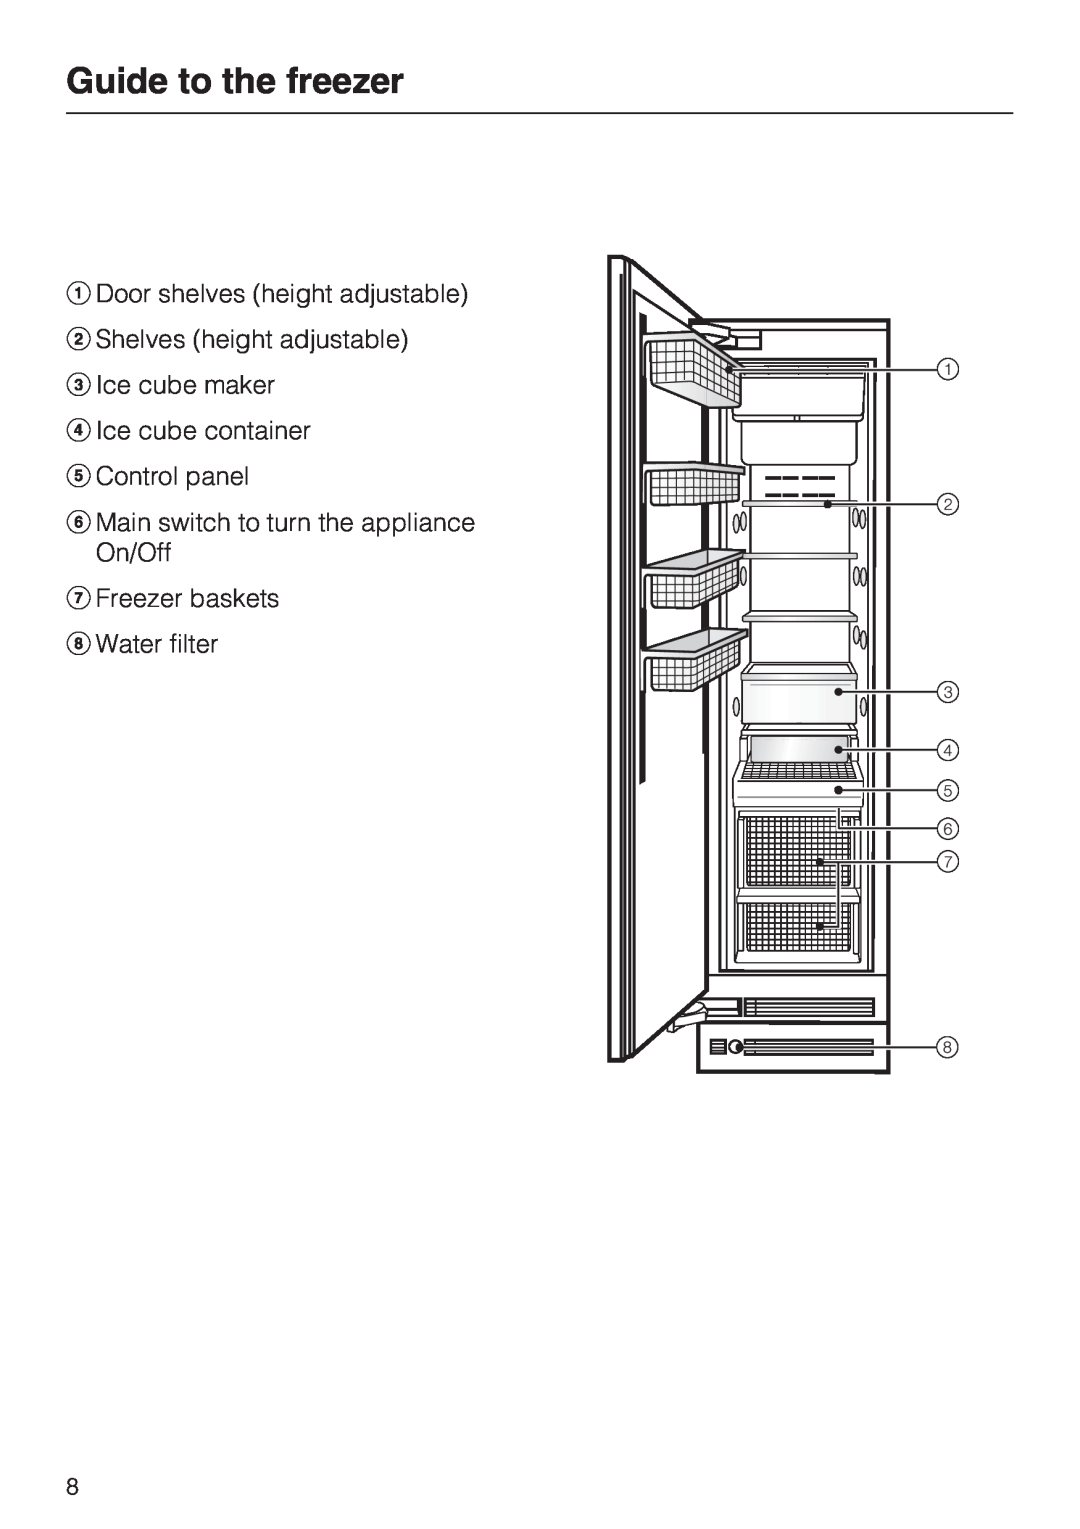 Miele F 1411 SF Guide to the freezer, Door shelves height adjustable, Shelves height adjustable Ice cube maker 